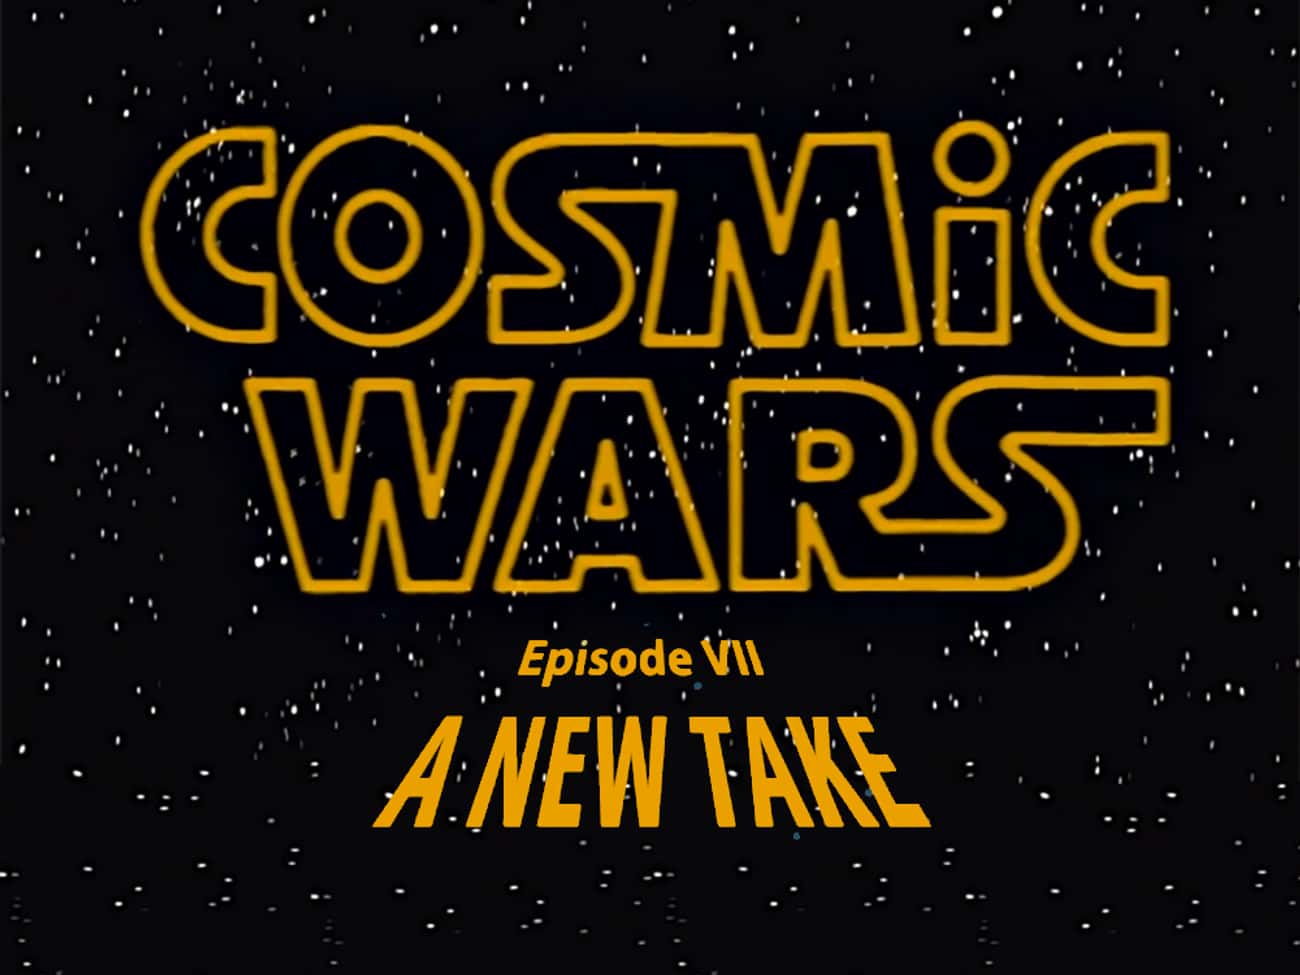 'Cosmic Wars: Episode VII - A New Take'